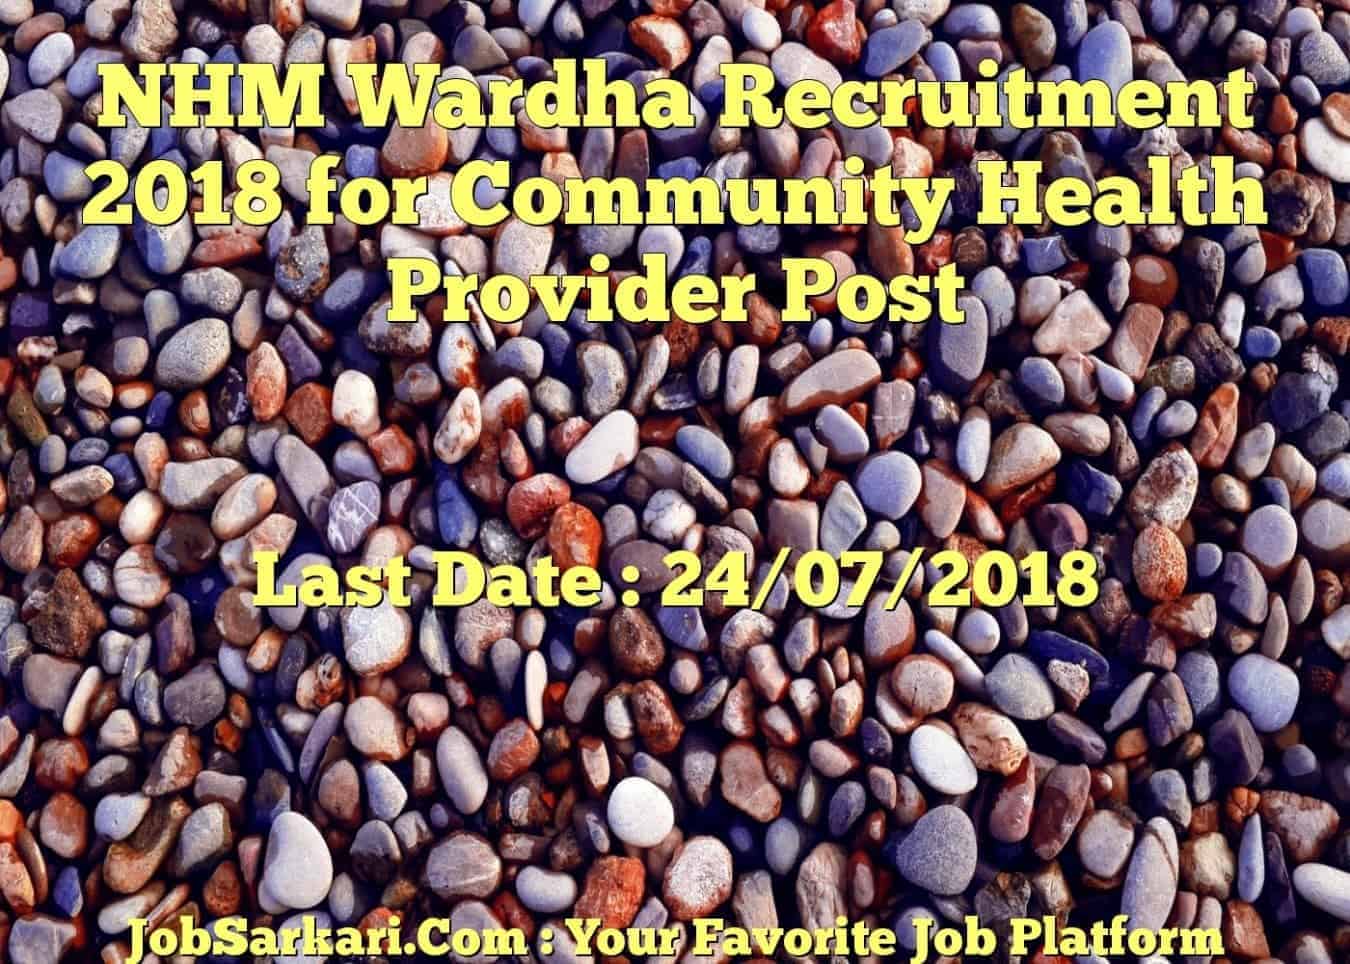 NHM Palghar Recruitment 2018 for Community Health Provider Post